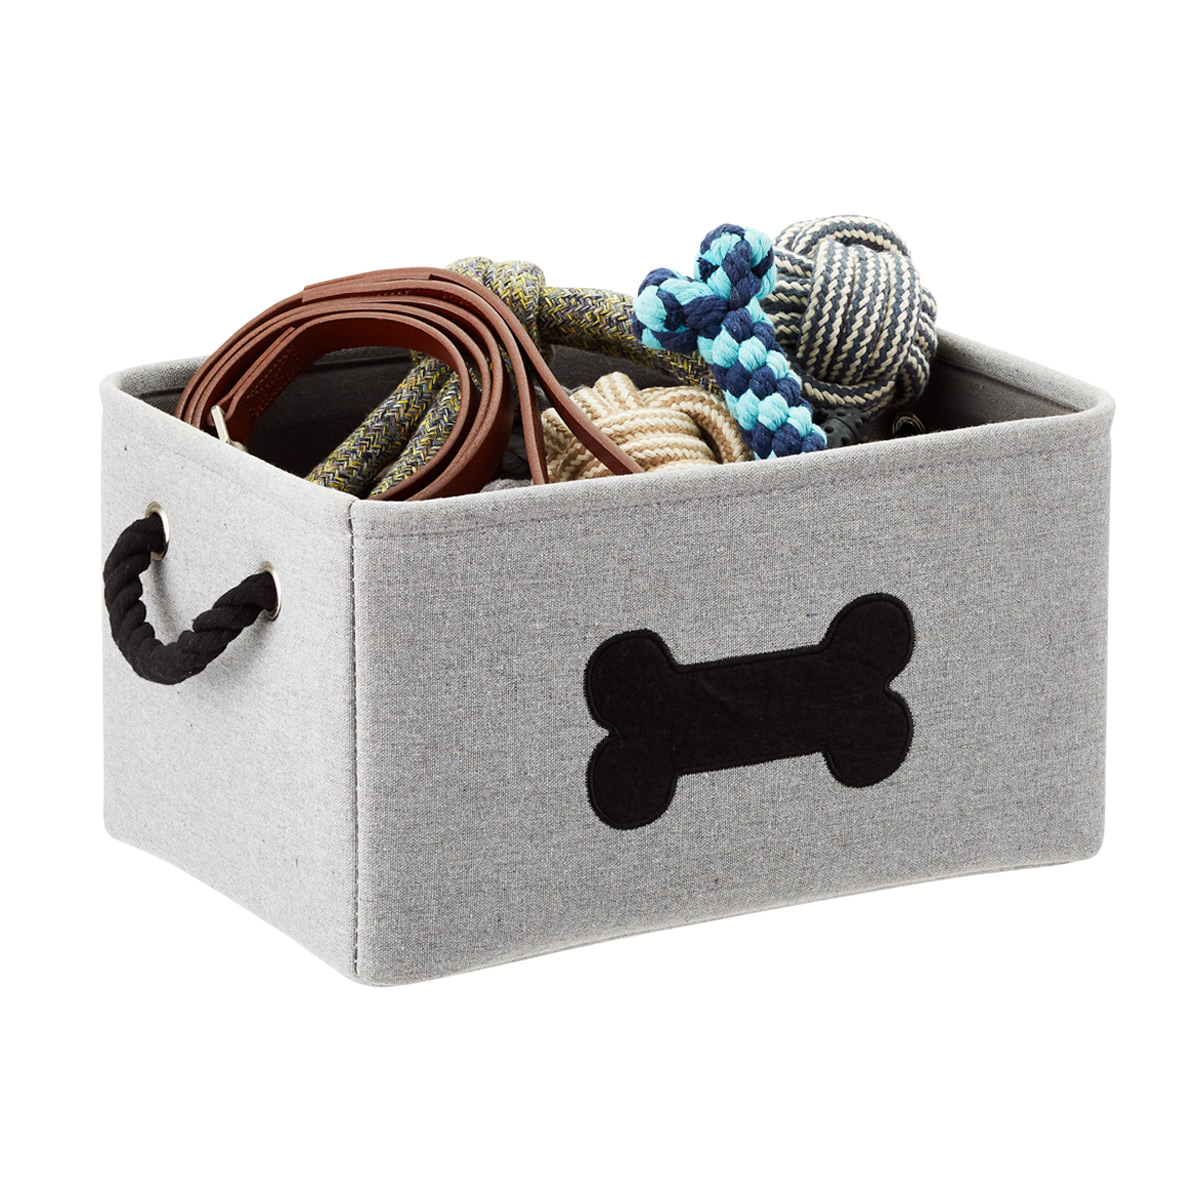 soft storage baskets for toys